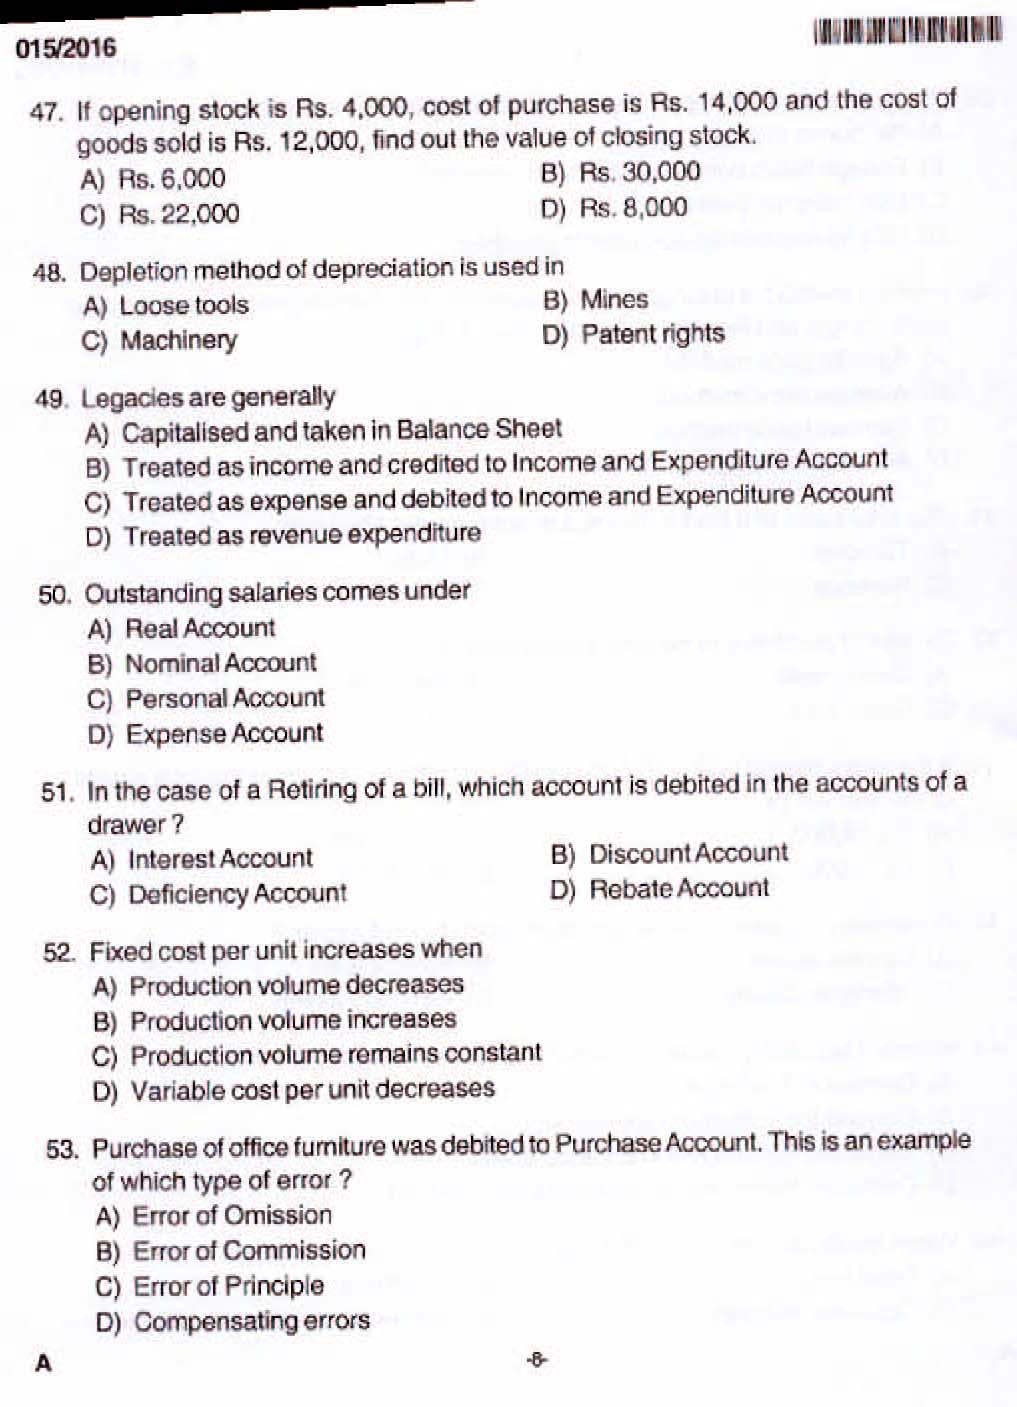 Kerala PSC Divisional Accountant OMR Exam 2016 Question Paper Code 0152016 6